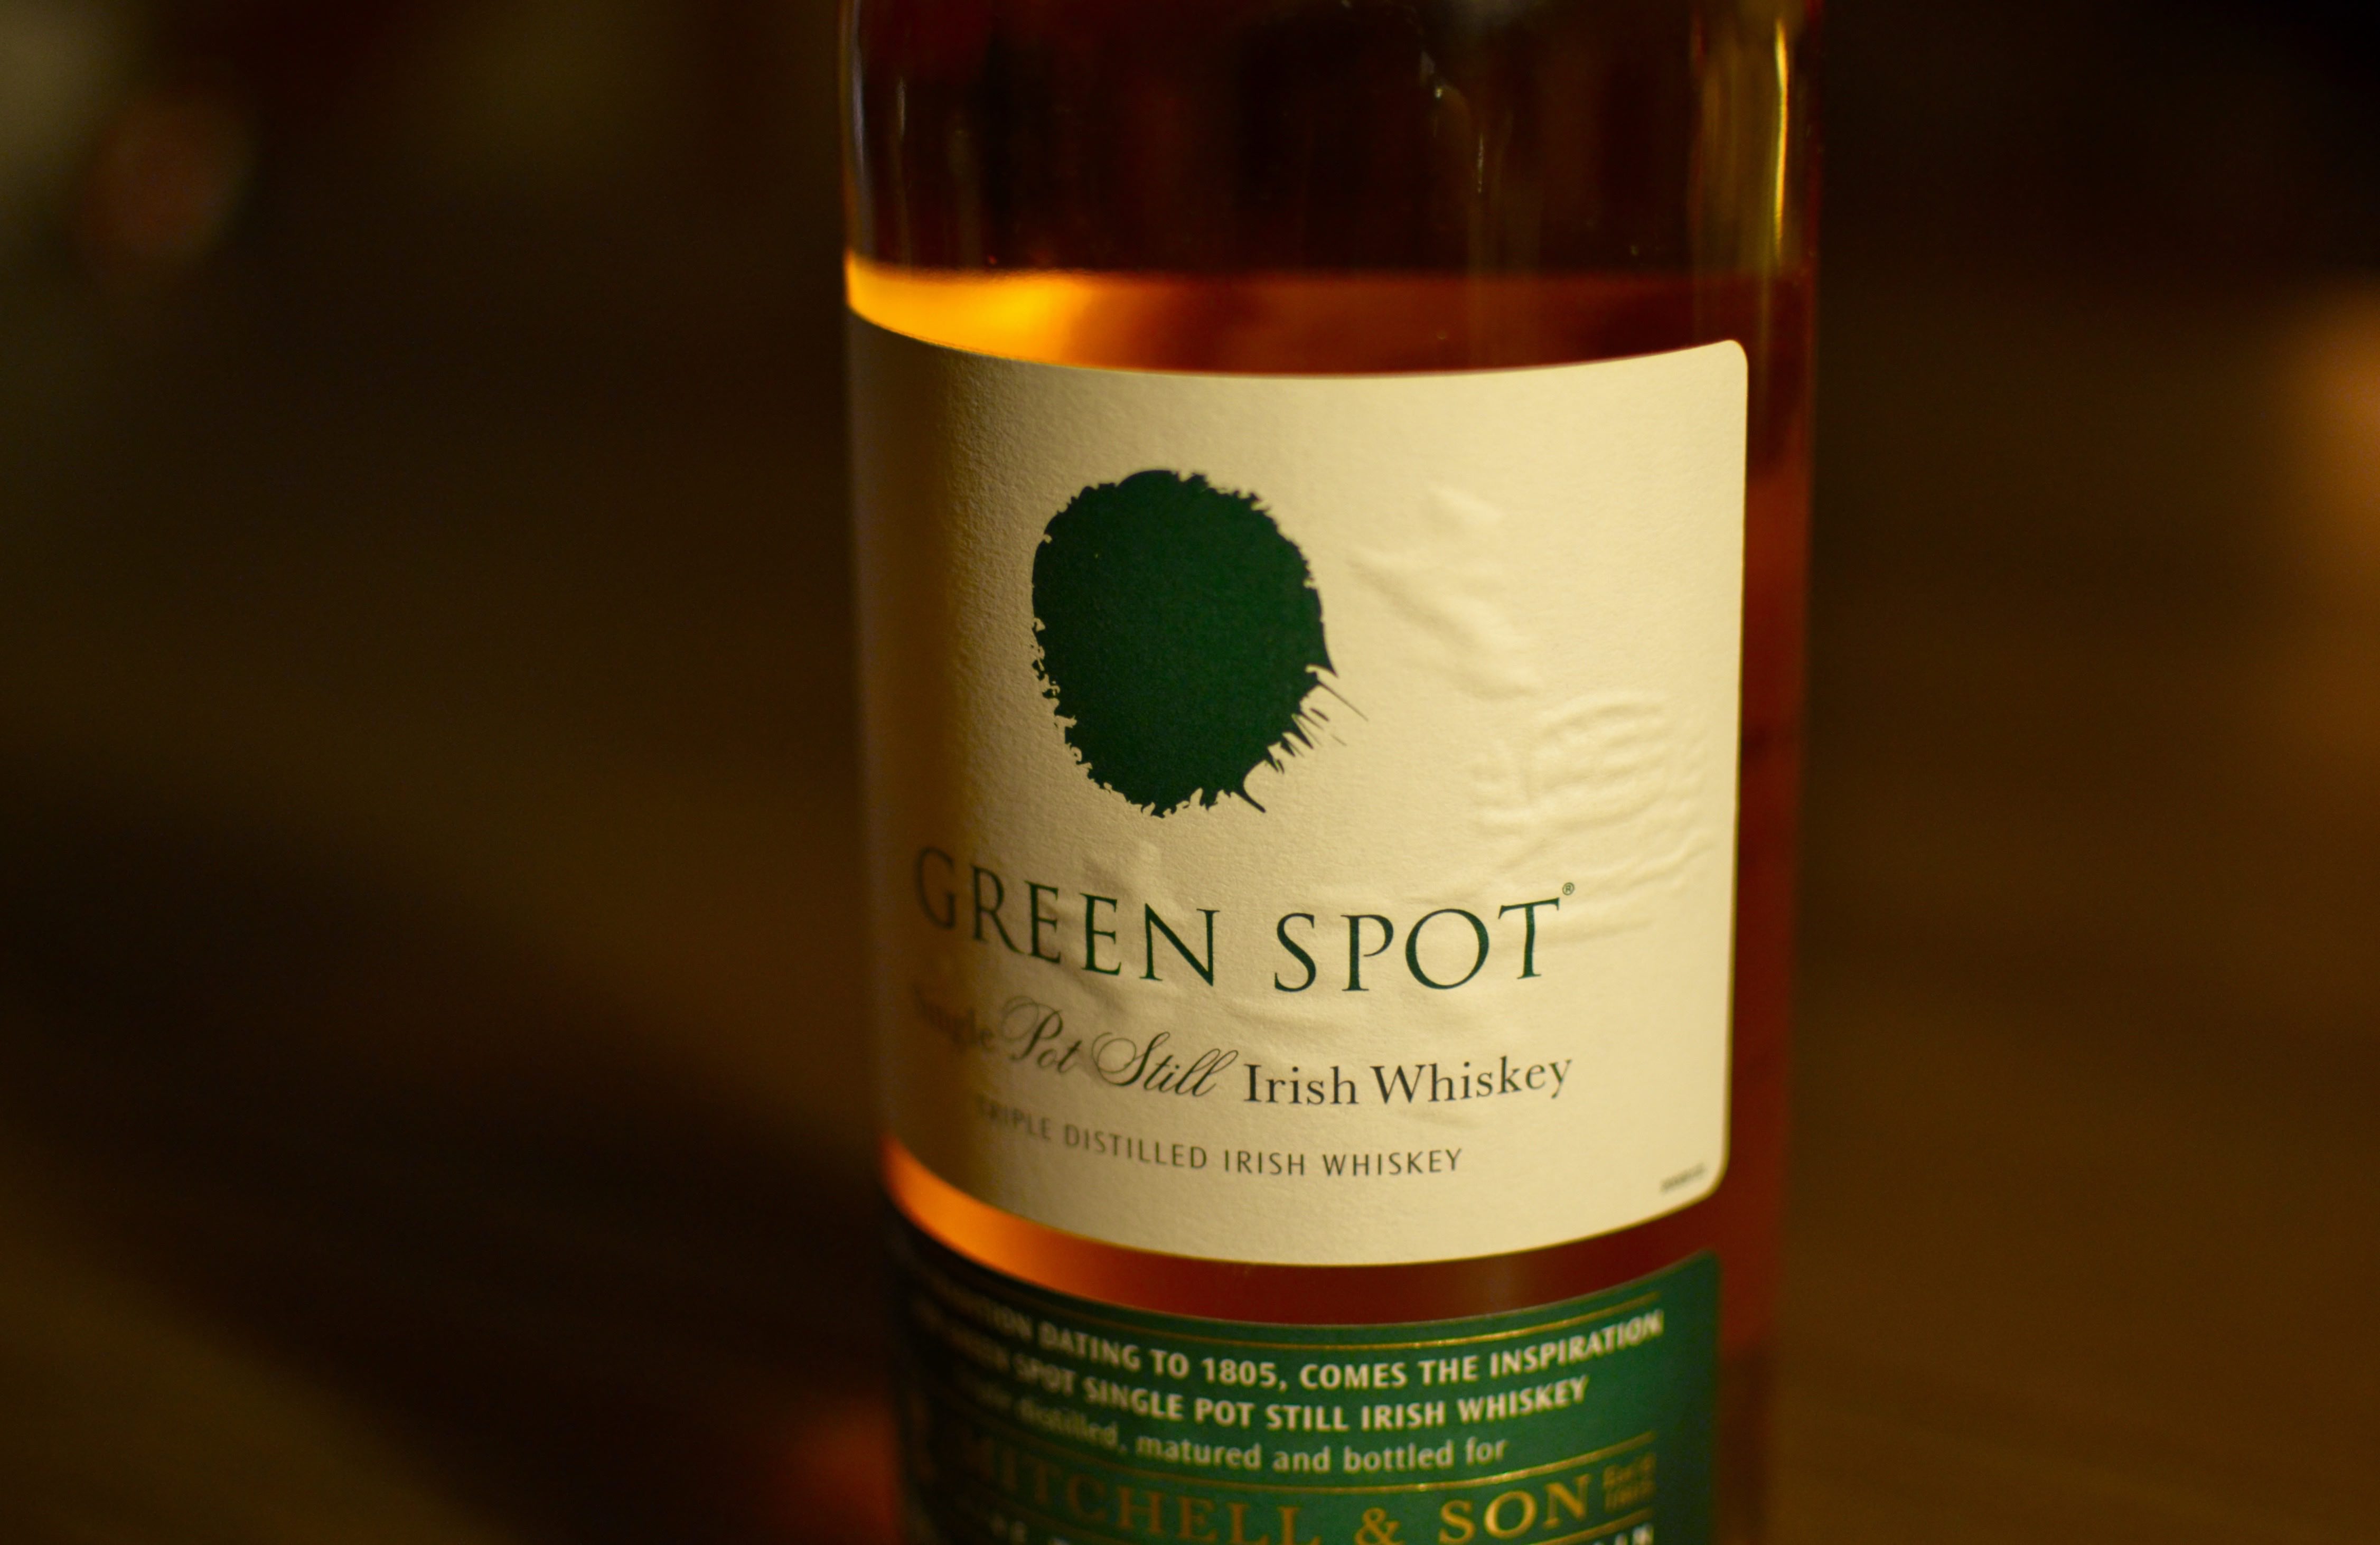 Green spot single pot still irish whiskey